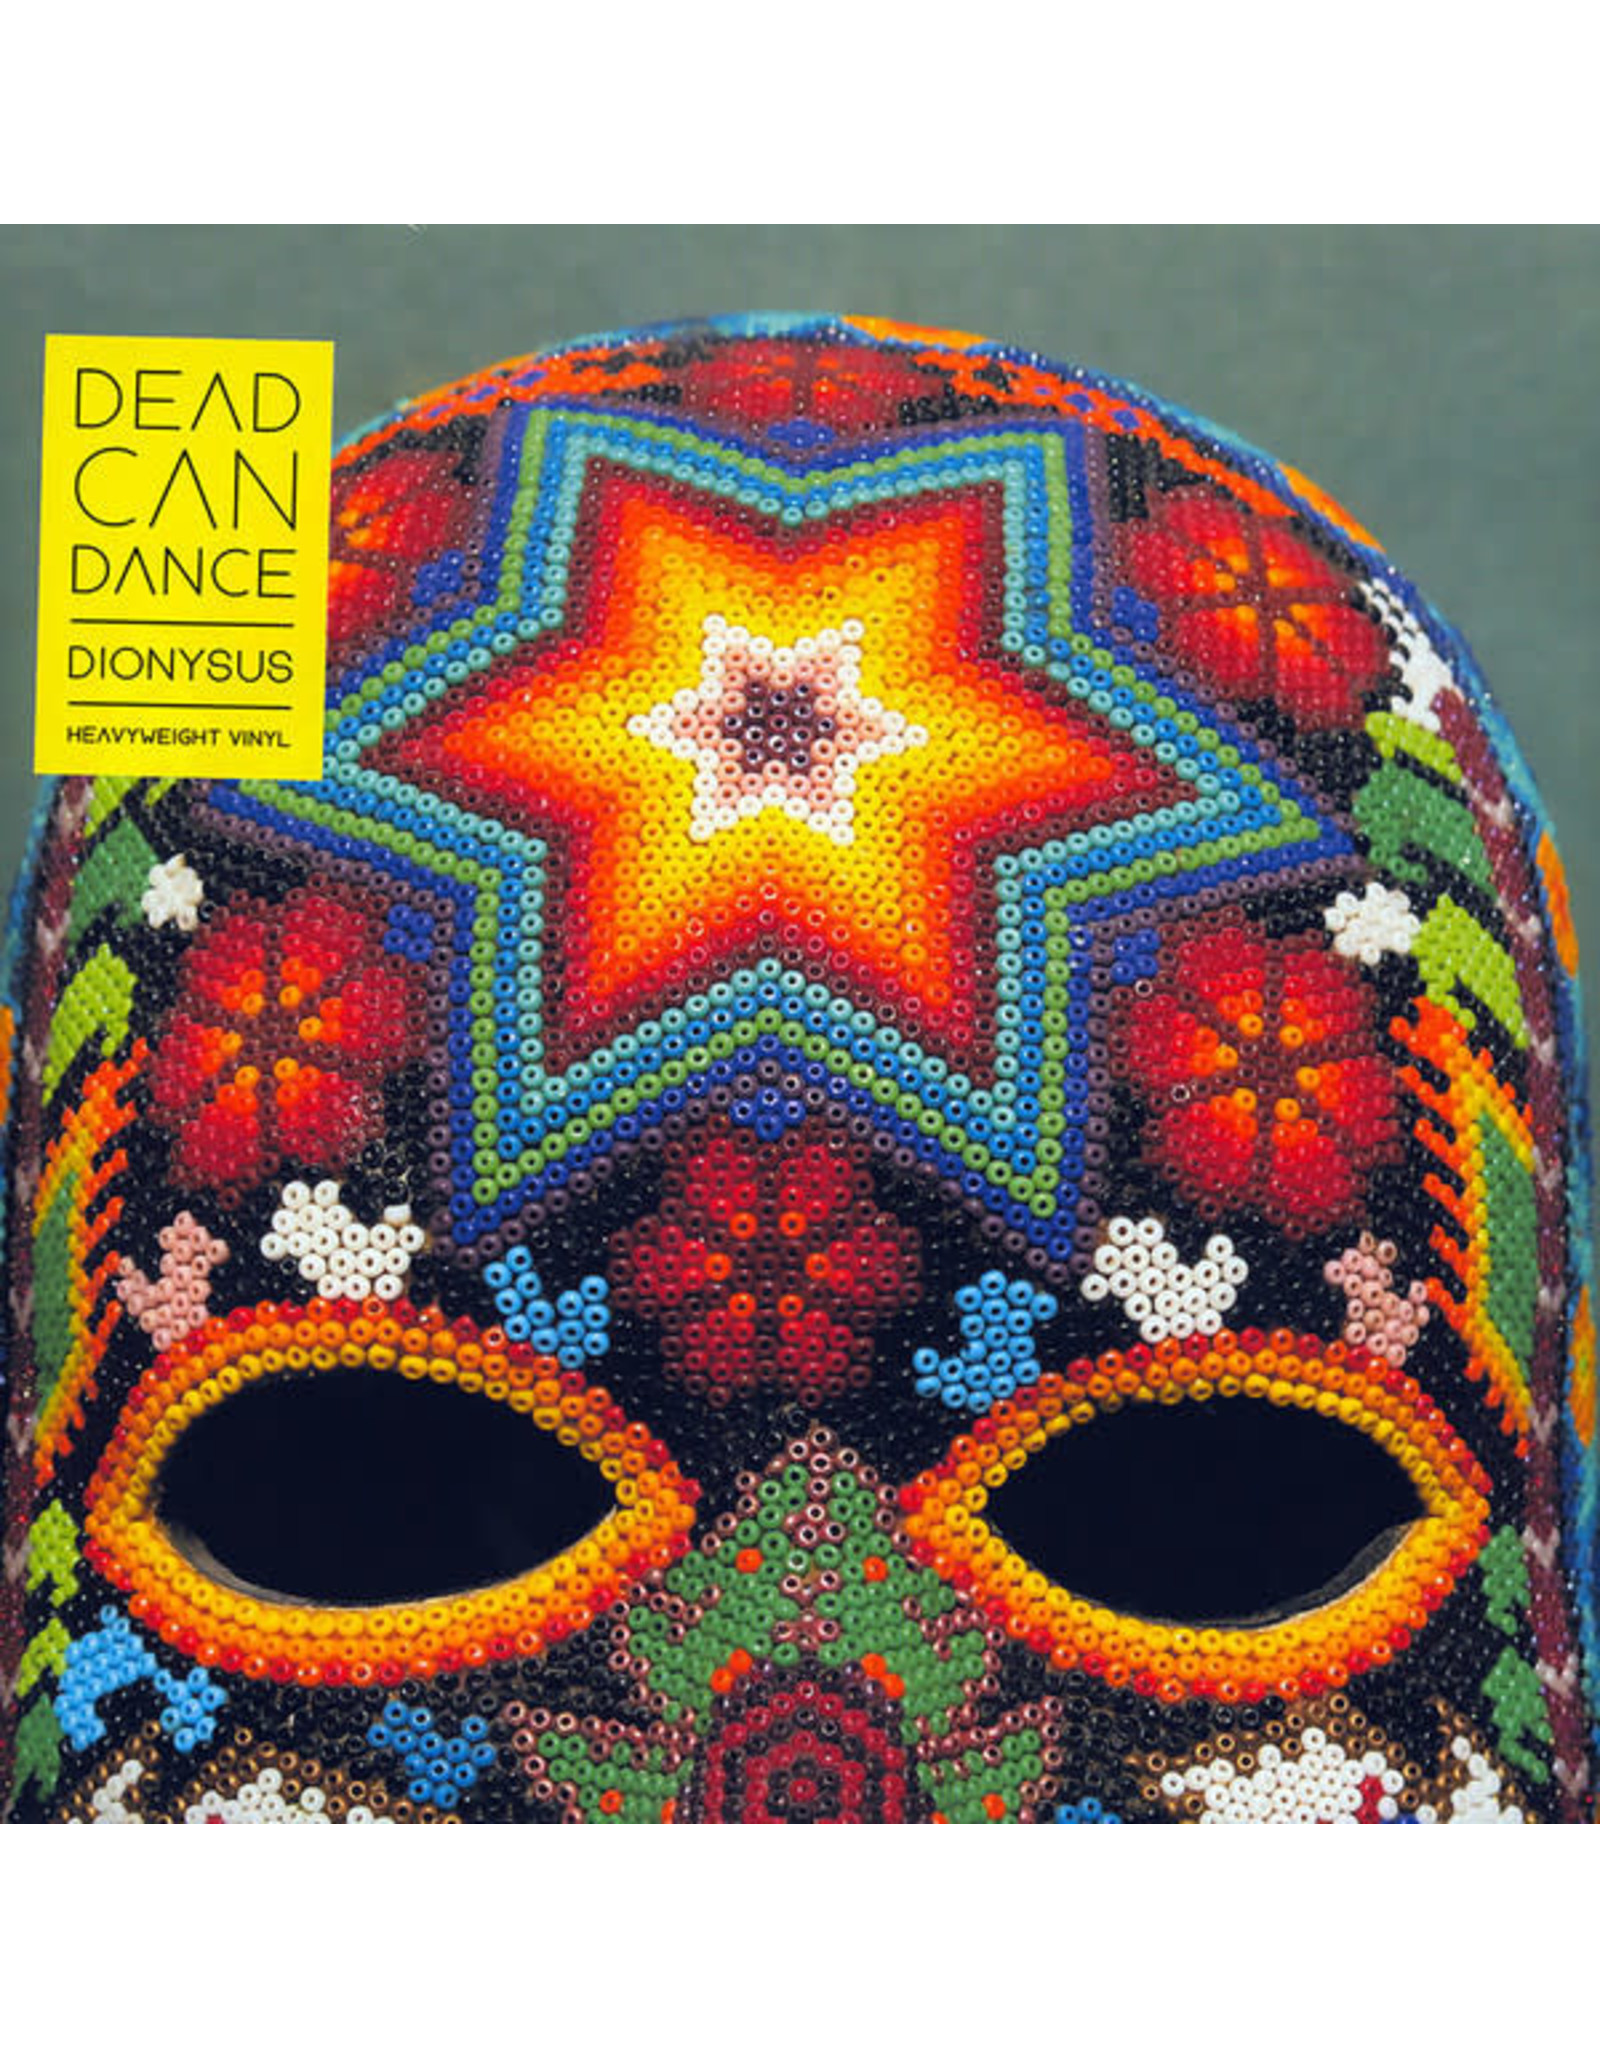 Dead Can Dance - Dionysus LP